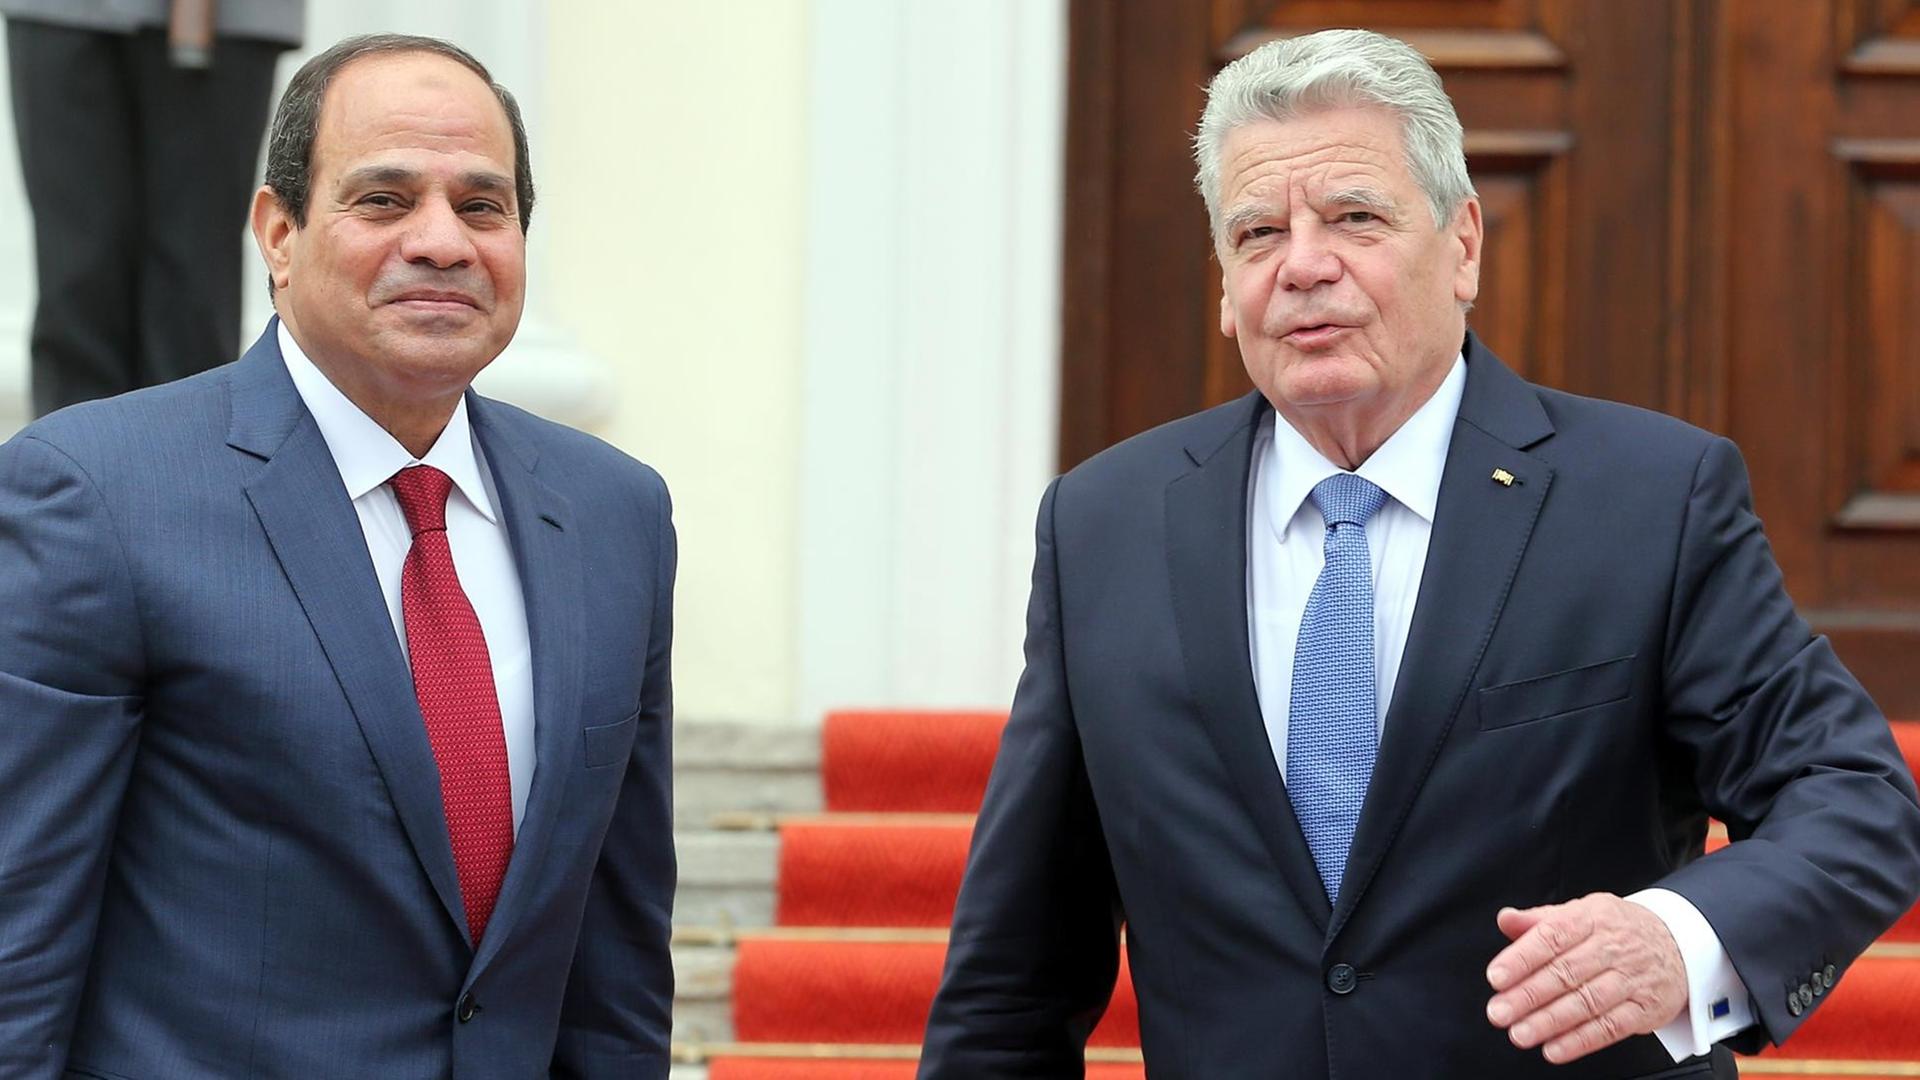 Bundespräsident Joachim Gauck (r) empfängt am 03.06.2015 vor dem Schloss Bellevue in Berlin den ägyptischen Präsidenten Abdel Fattah al-Sisi.